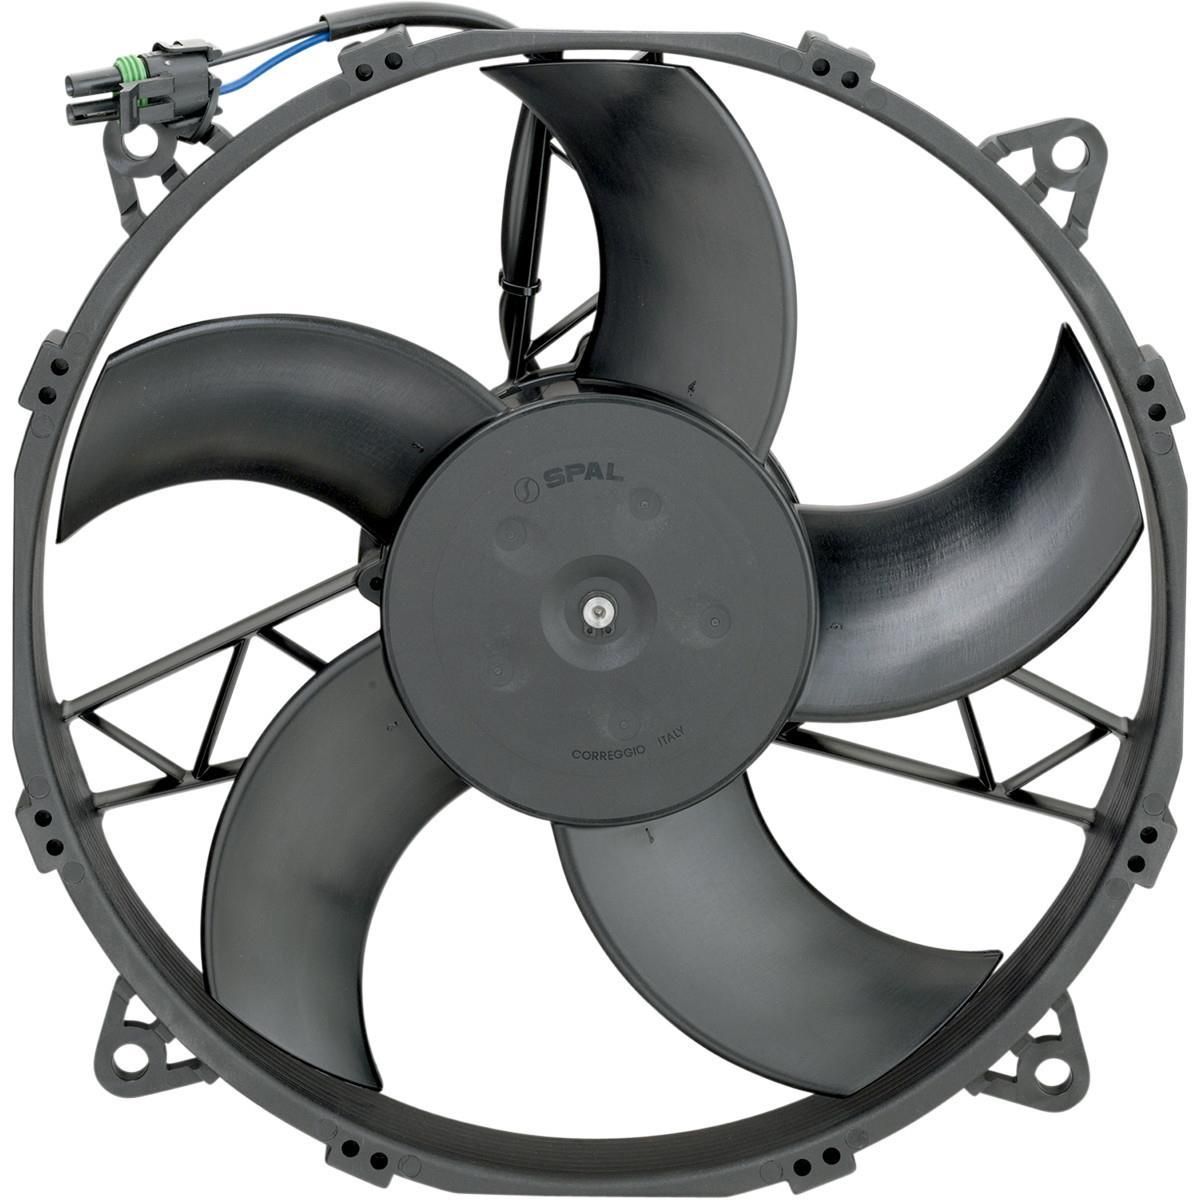 224T-MOOSE-UTILI-19010332 Hi-Performance Cooling Fan